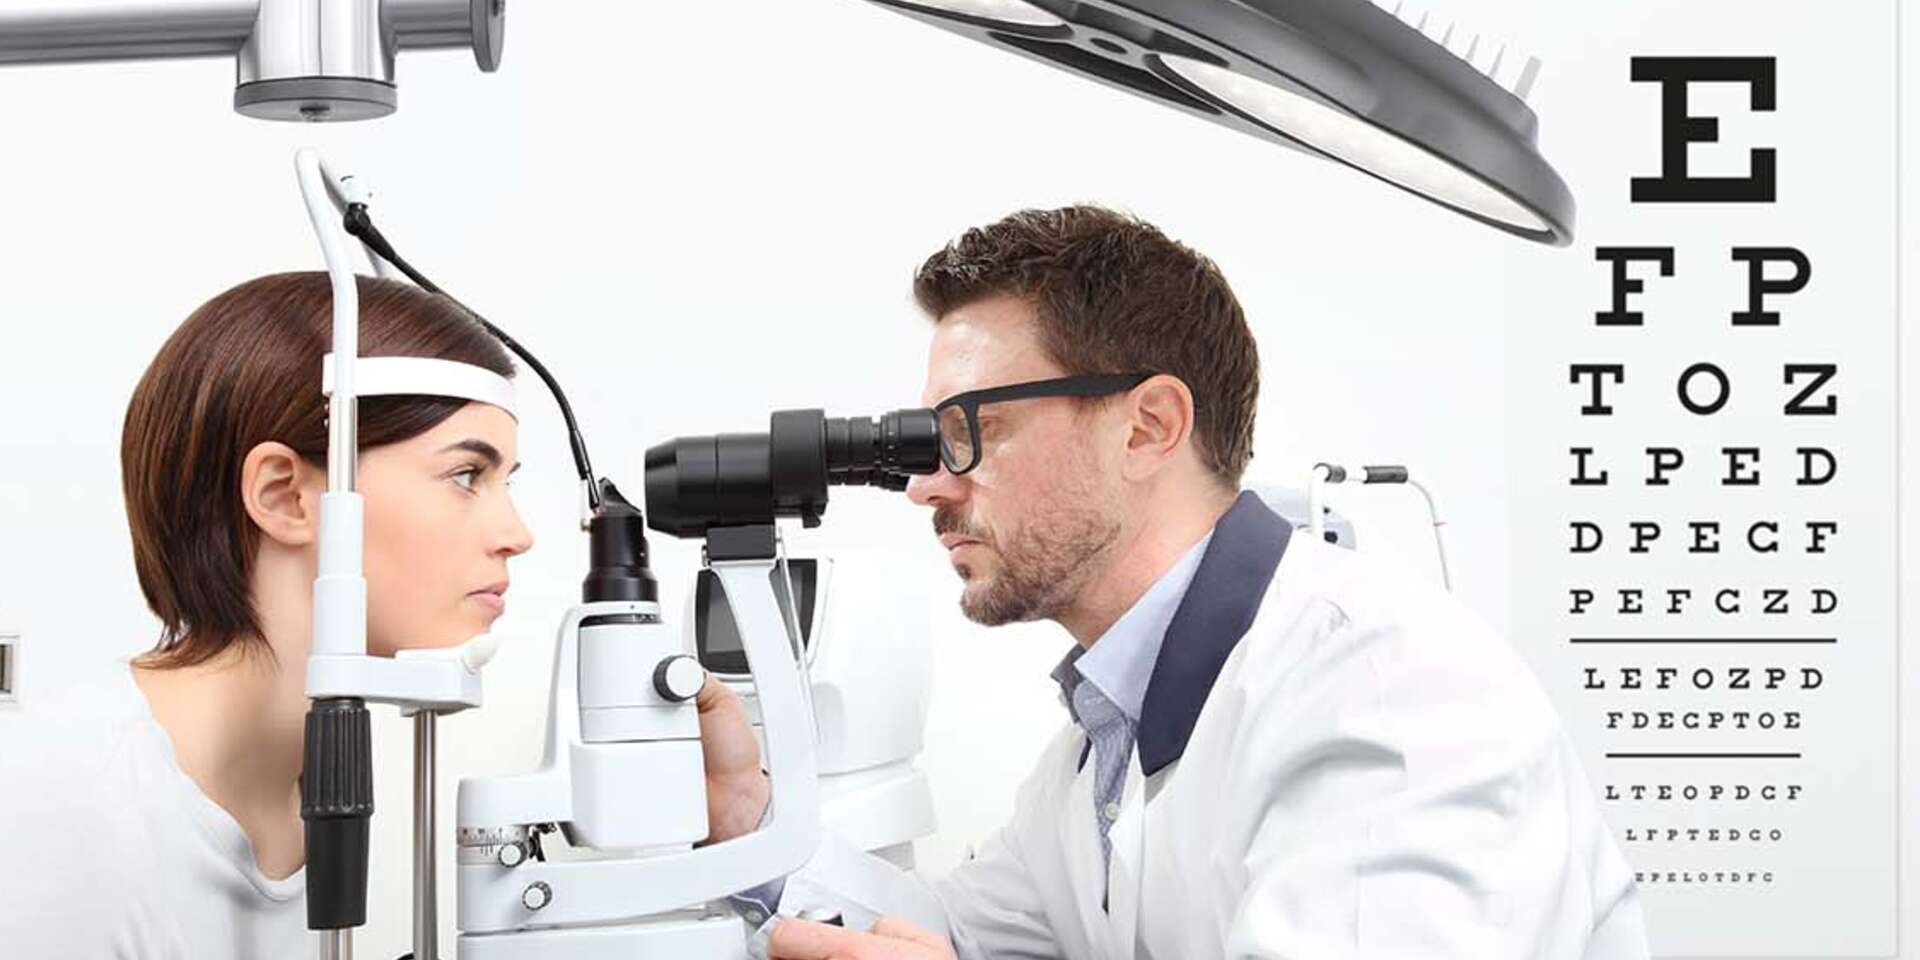 Жд окулист. Оптик-оптометрист. Обследование зрения. Оптометрист в оптику. Оптика в медицине.